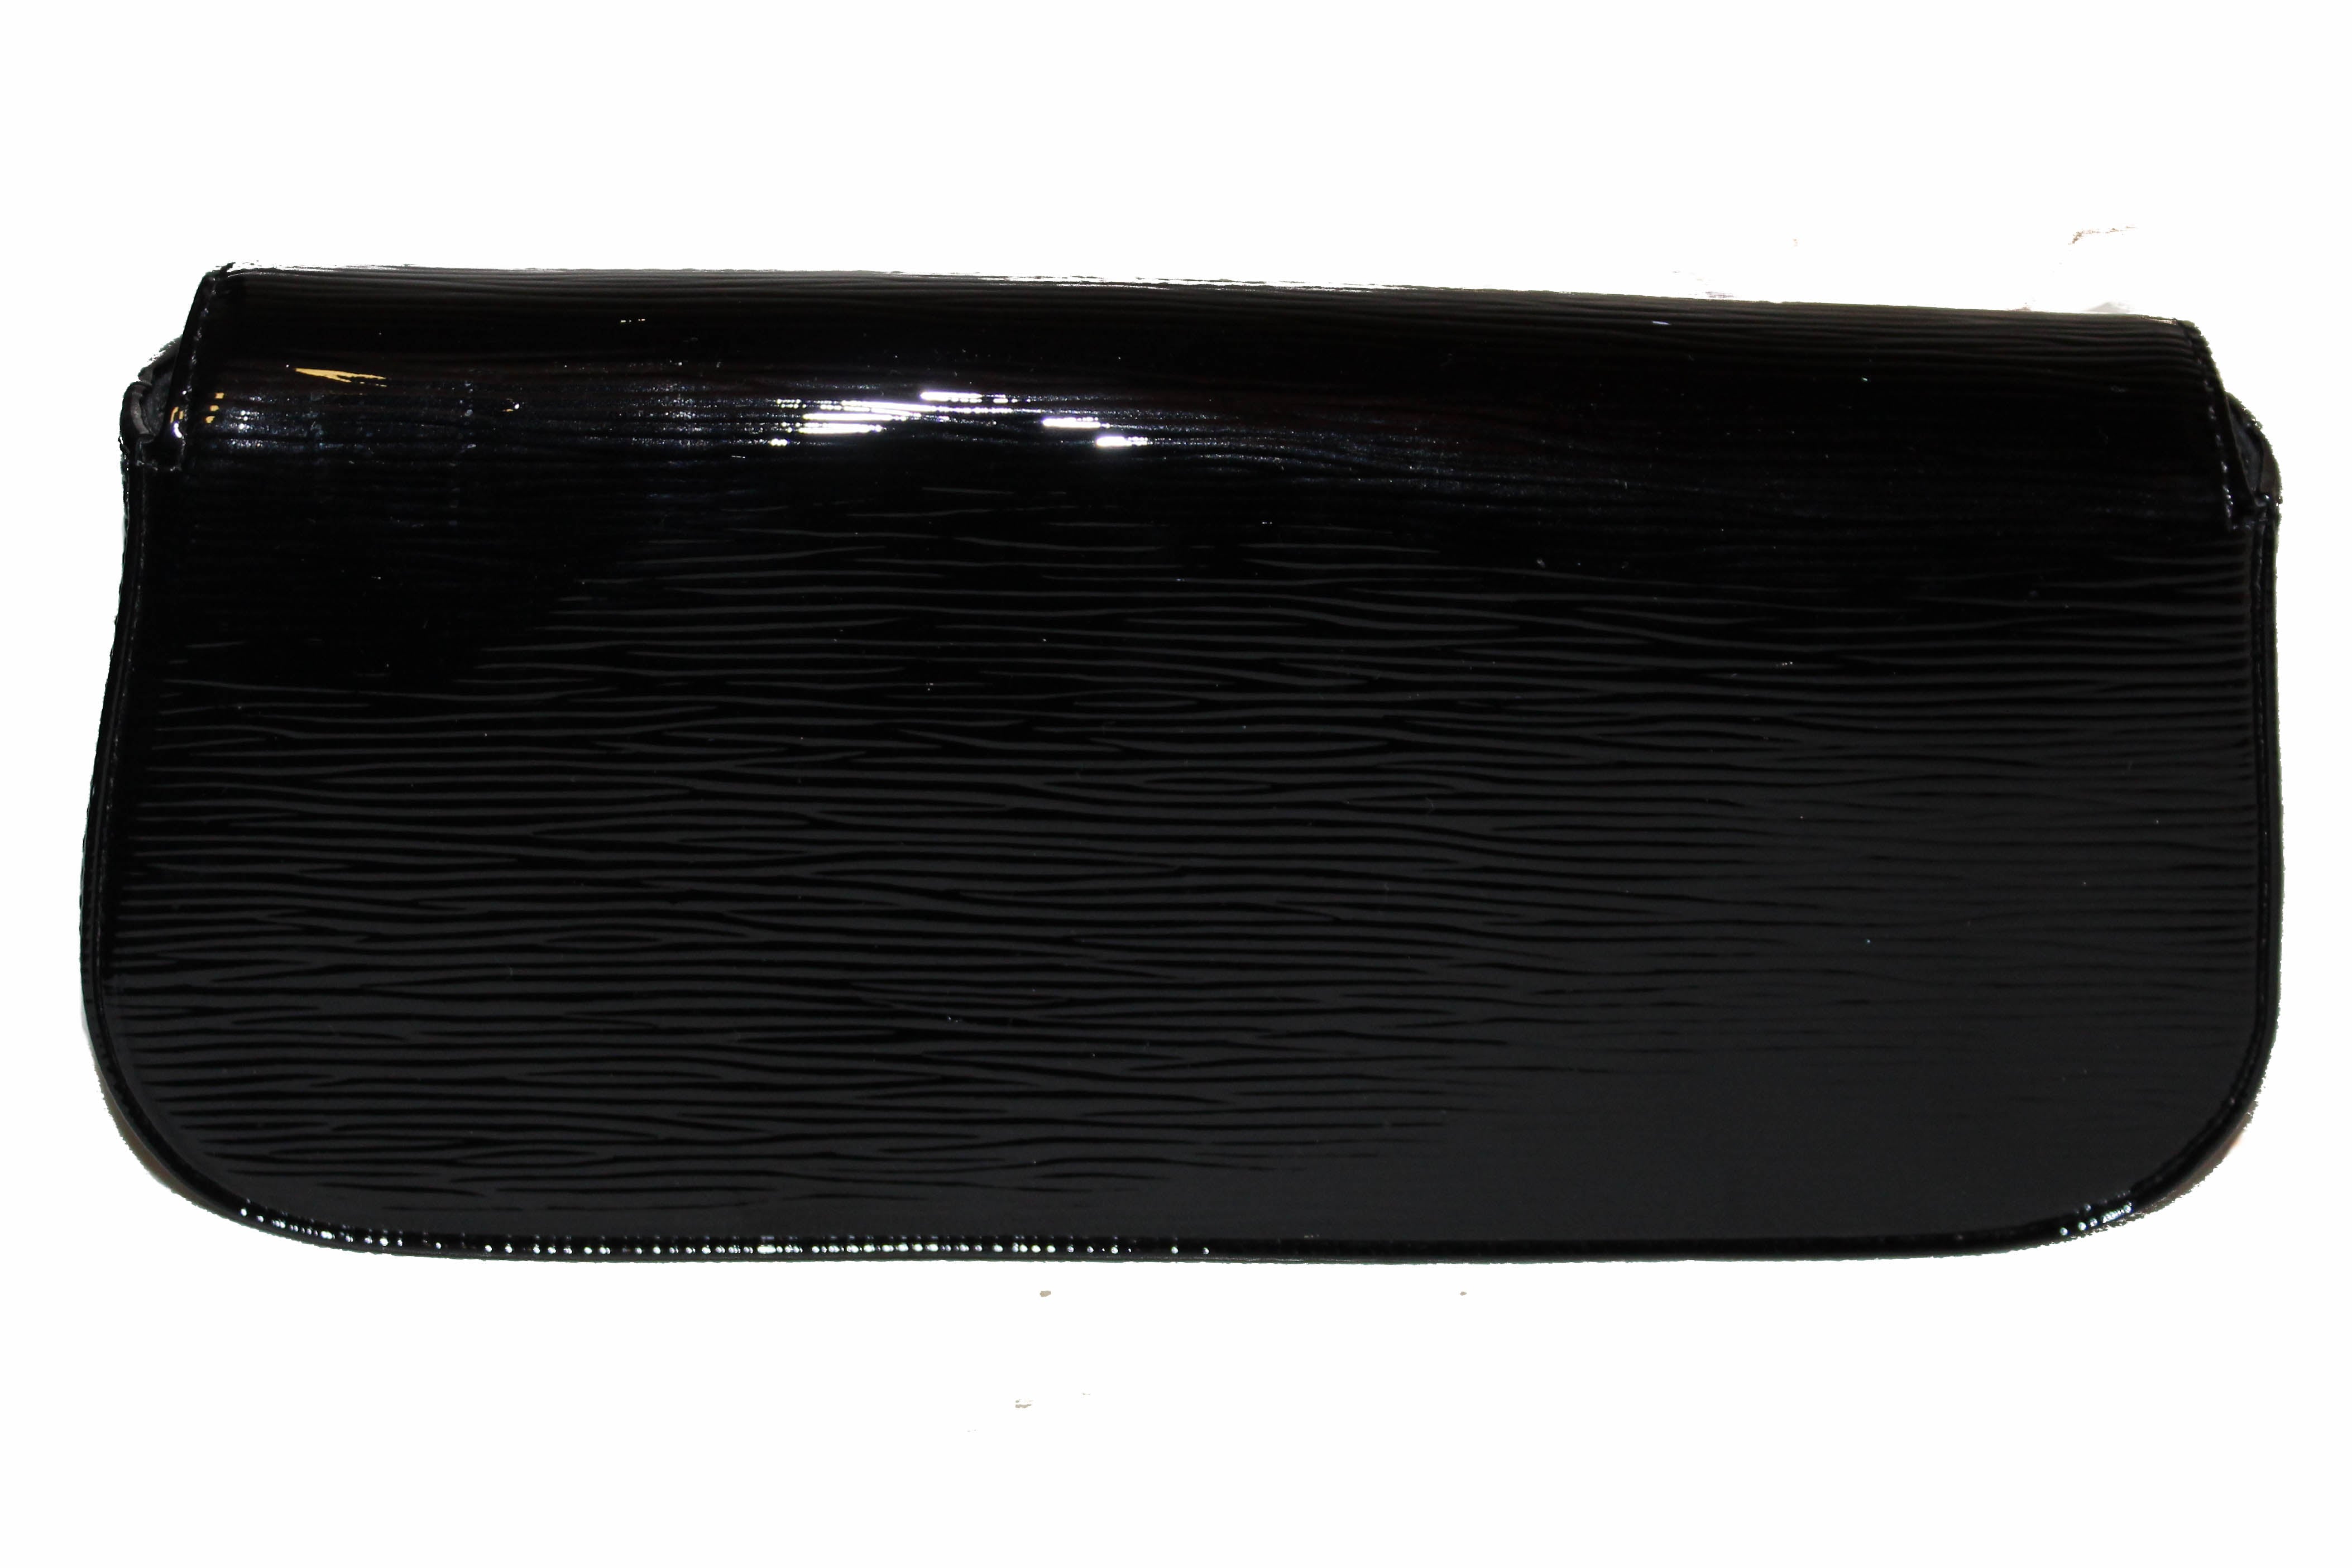 Authentic Louis Vuitton Black Electric Epi Leather Sobe Clutch